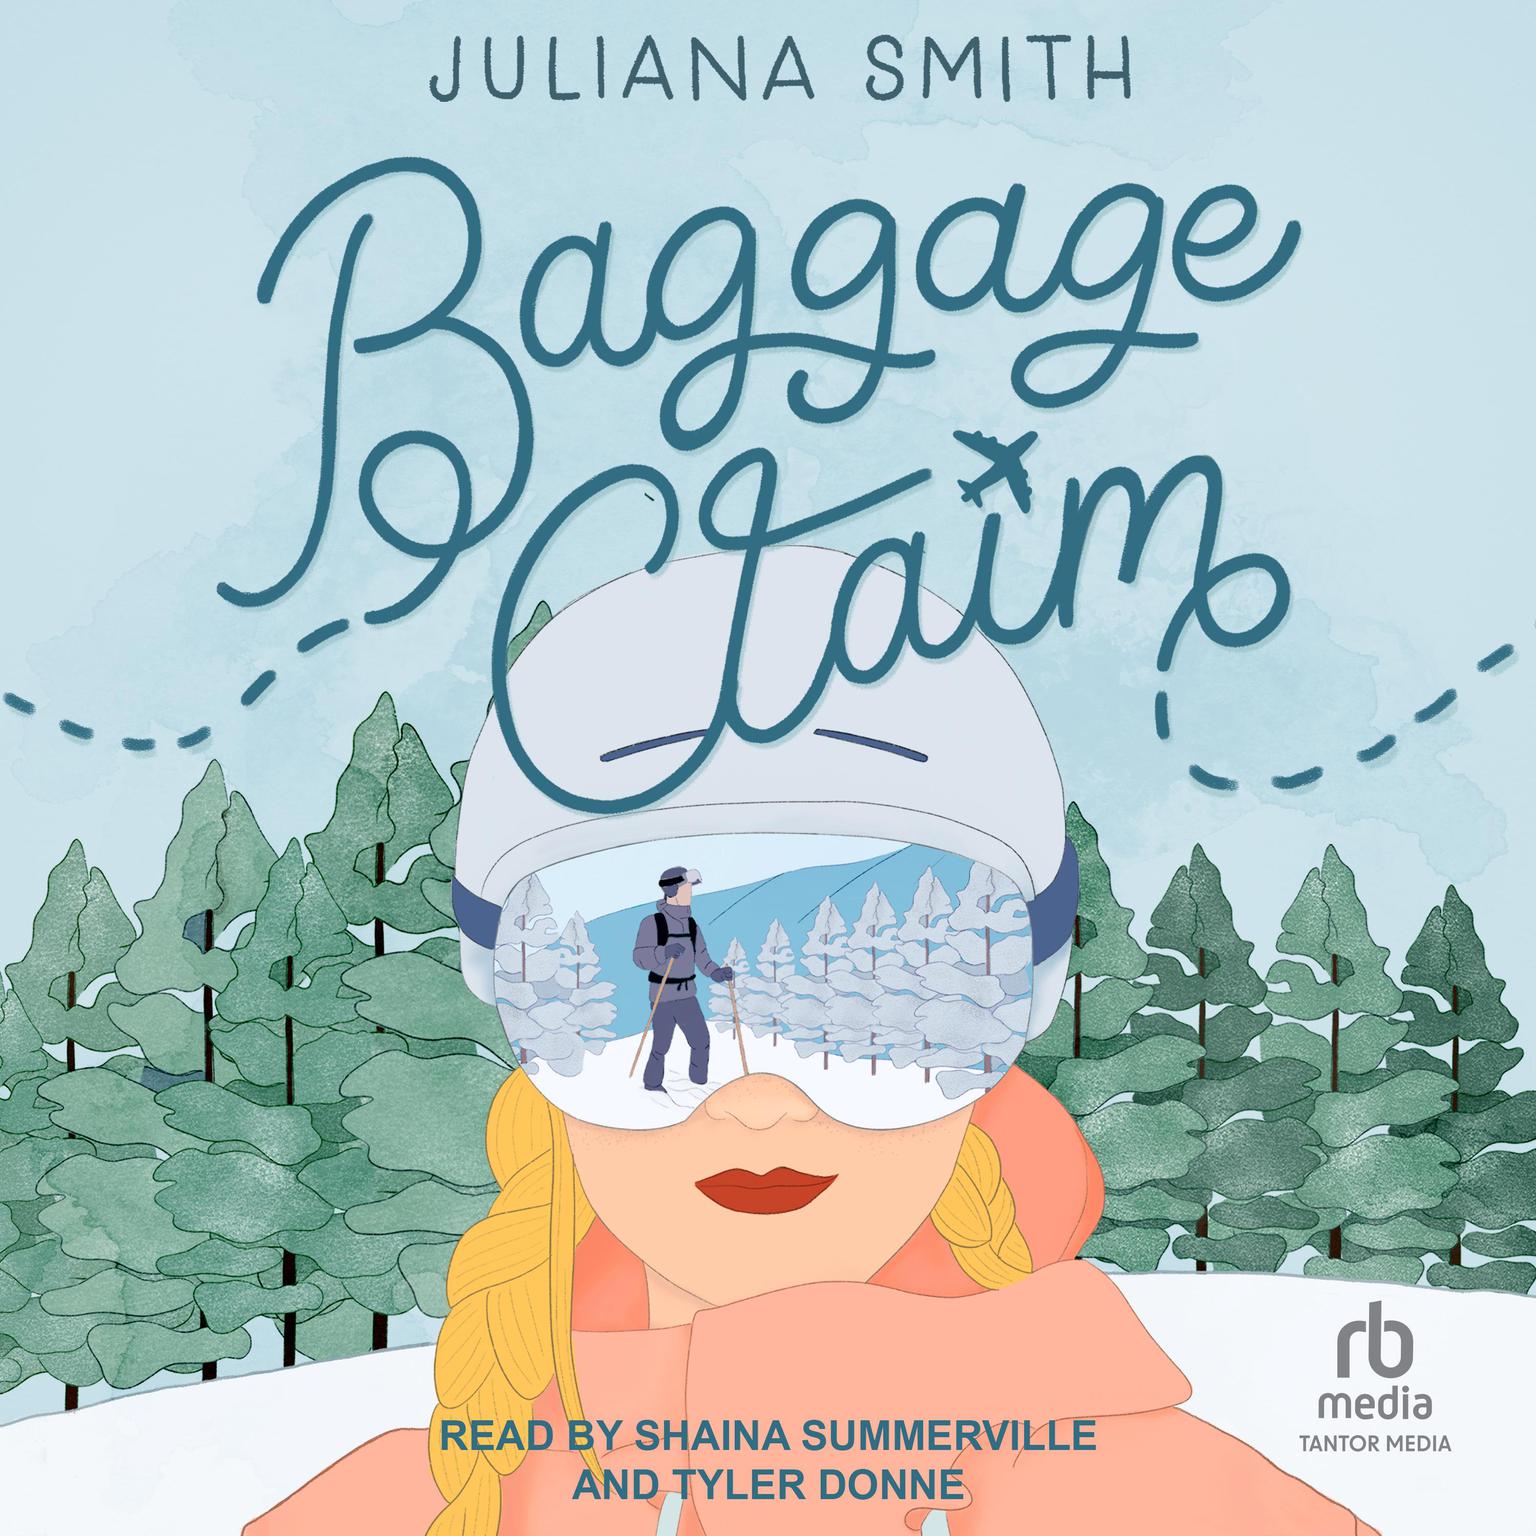 Baggage Claim Audiobook, by Juliana Smith